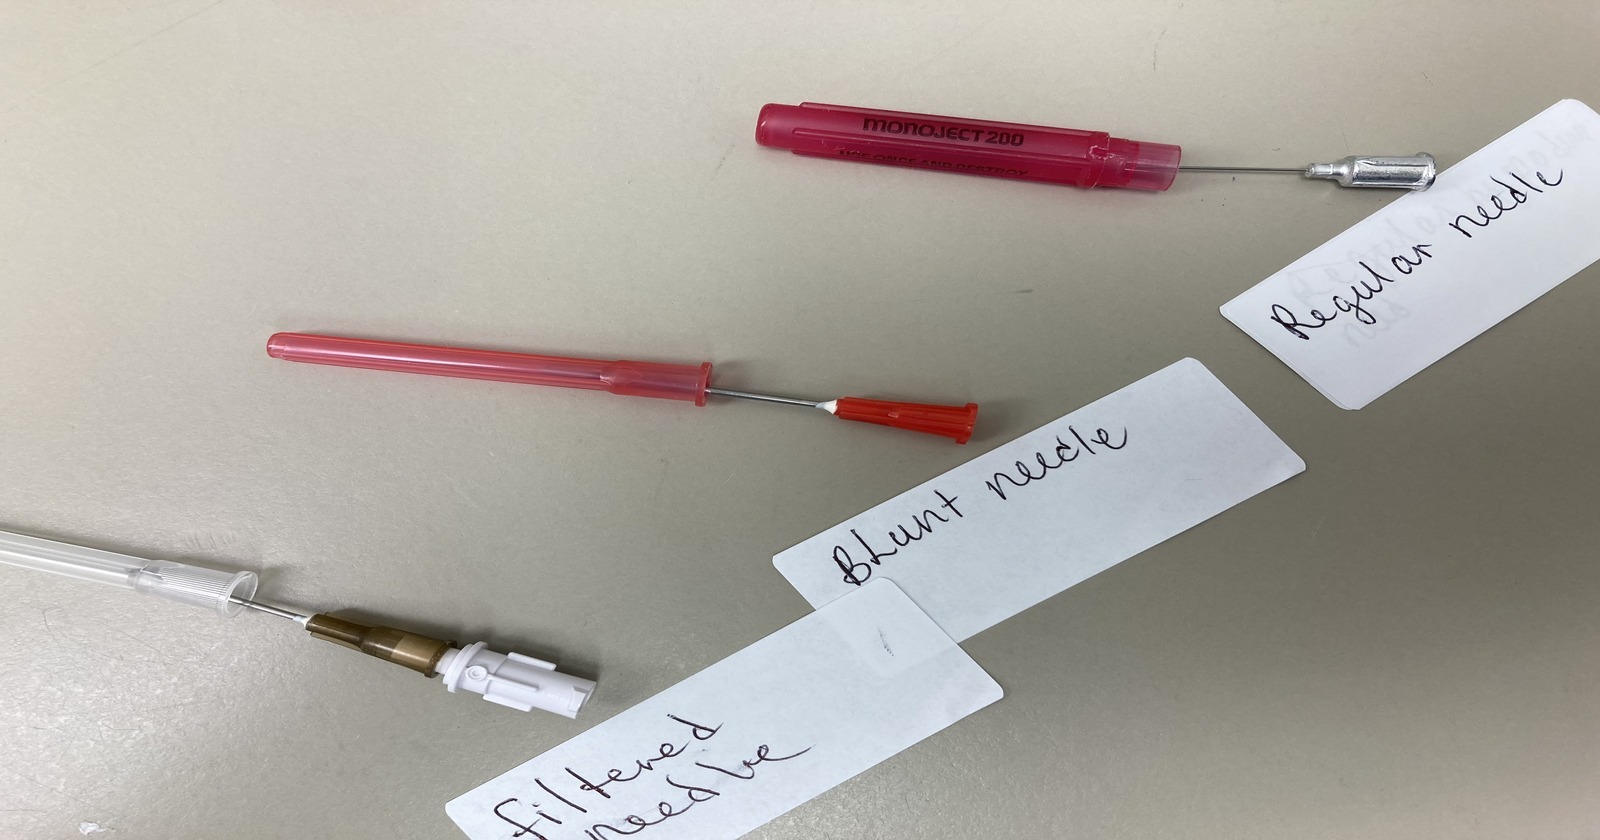 Filtered Needle vs Blunt Needle vs Regular Needle